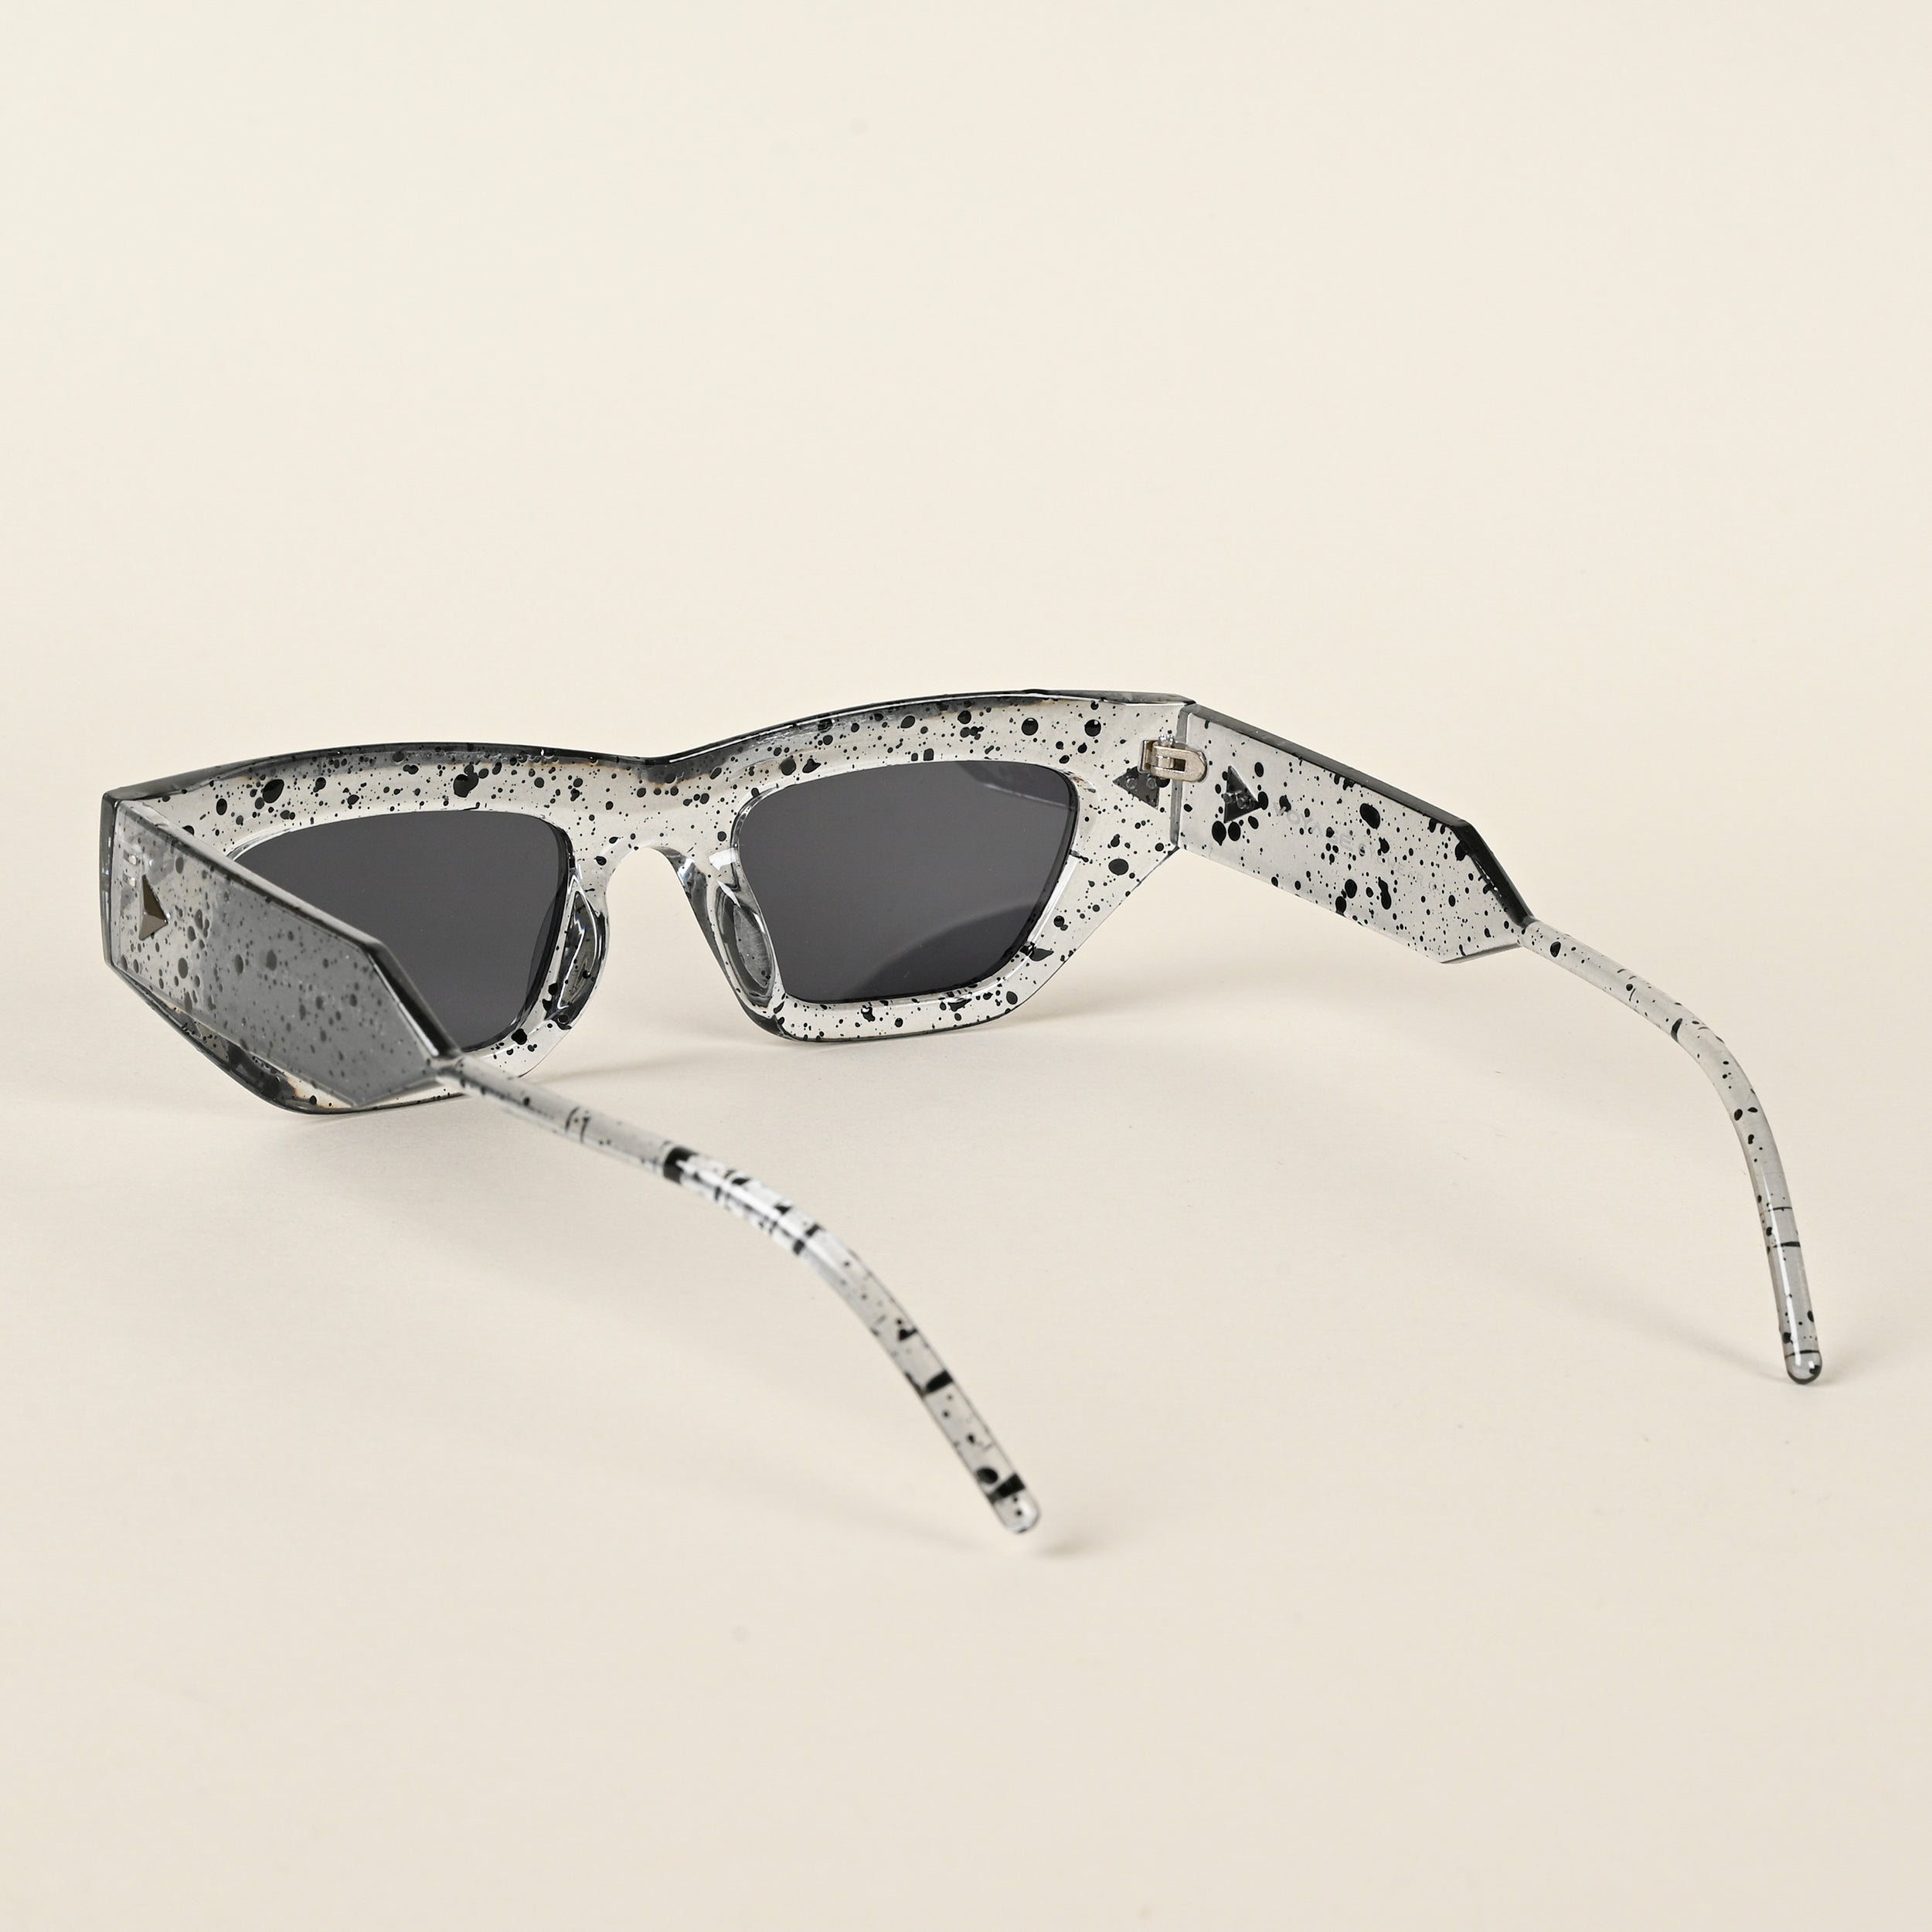 Voyage Grey Cateye Sunglasses for Women (LH077MG4506)